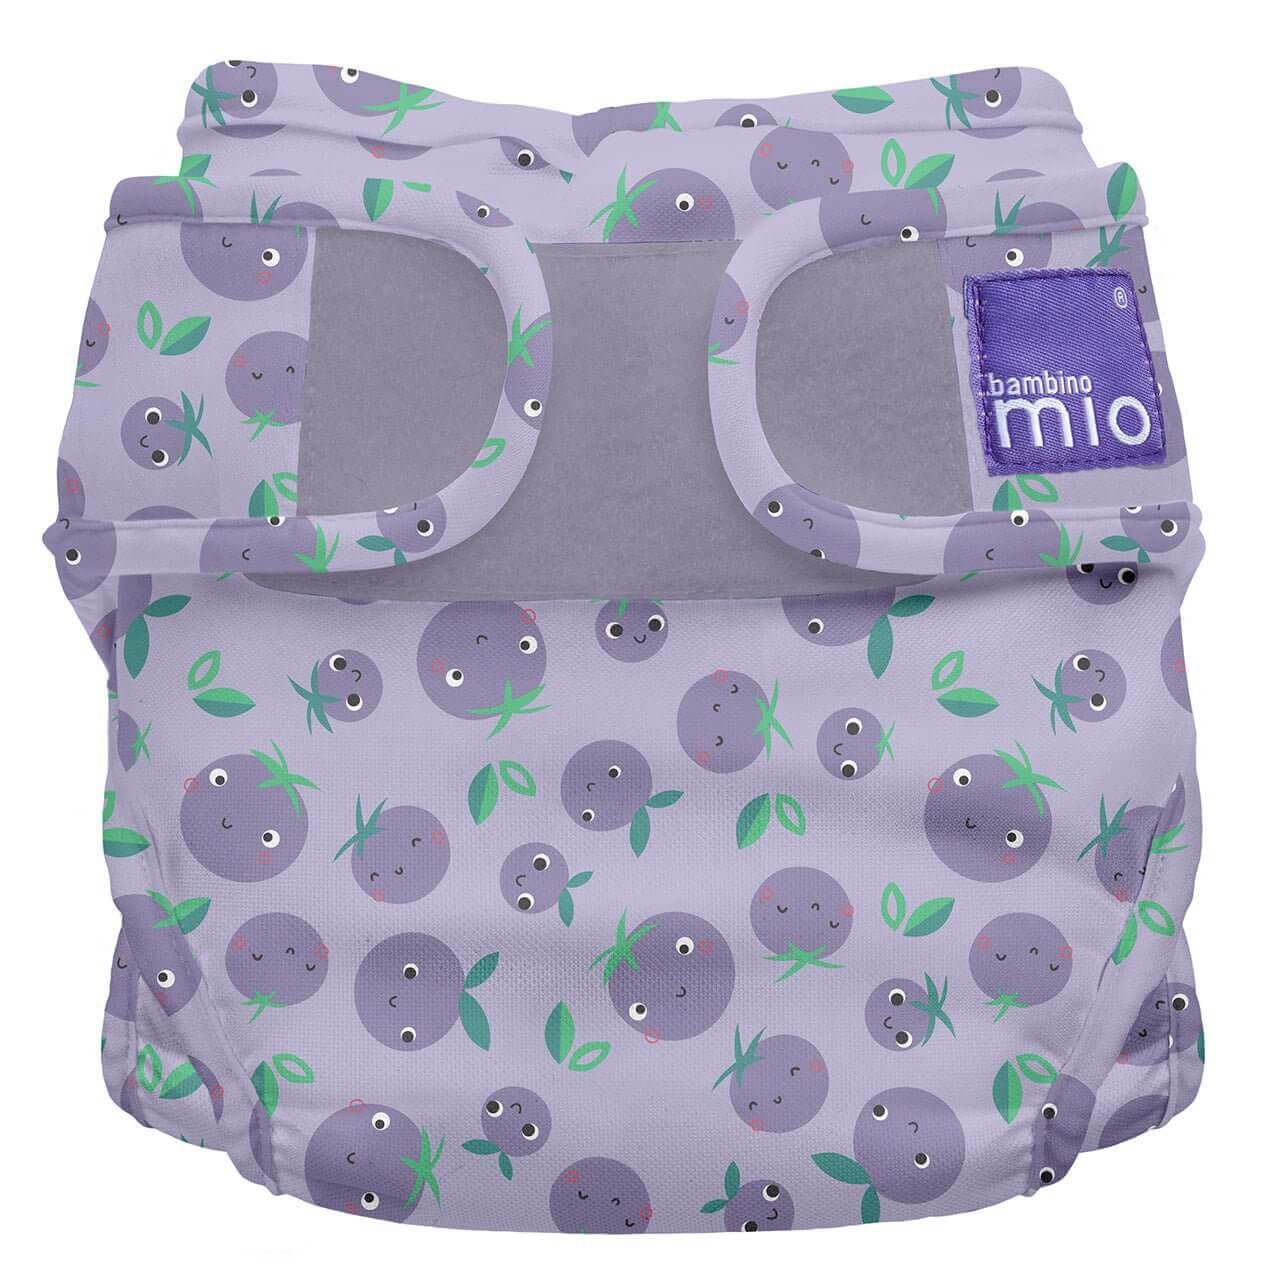 Bambino Mio Mioduo Reusable Nappy Cover Size: Size 1 Colour: Berry Bounce reusable nappies nappy covers Earthlets